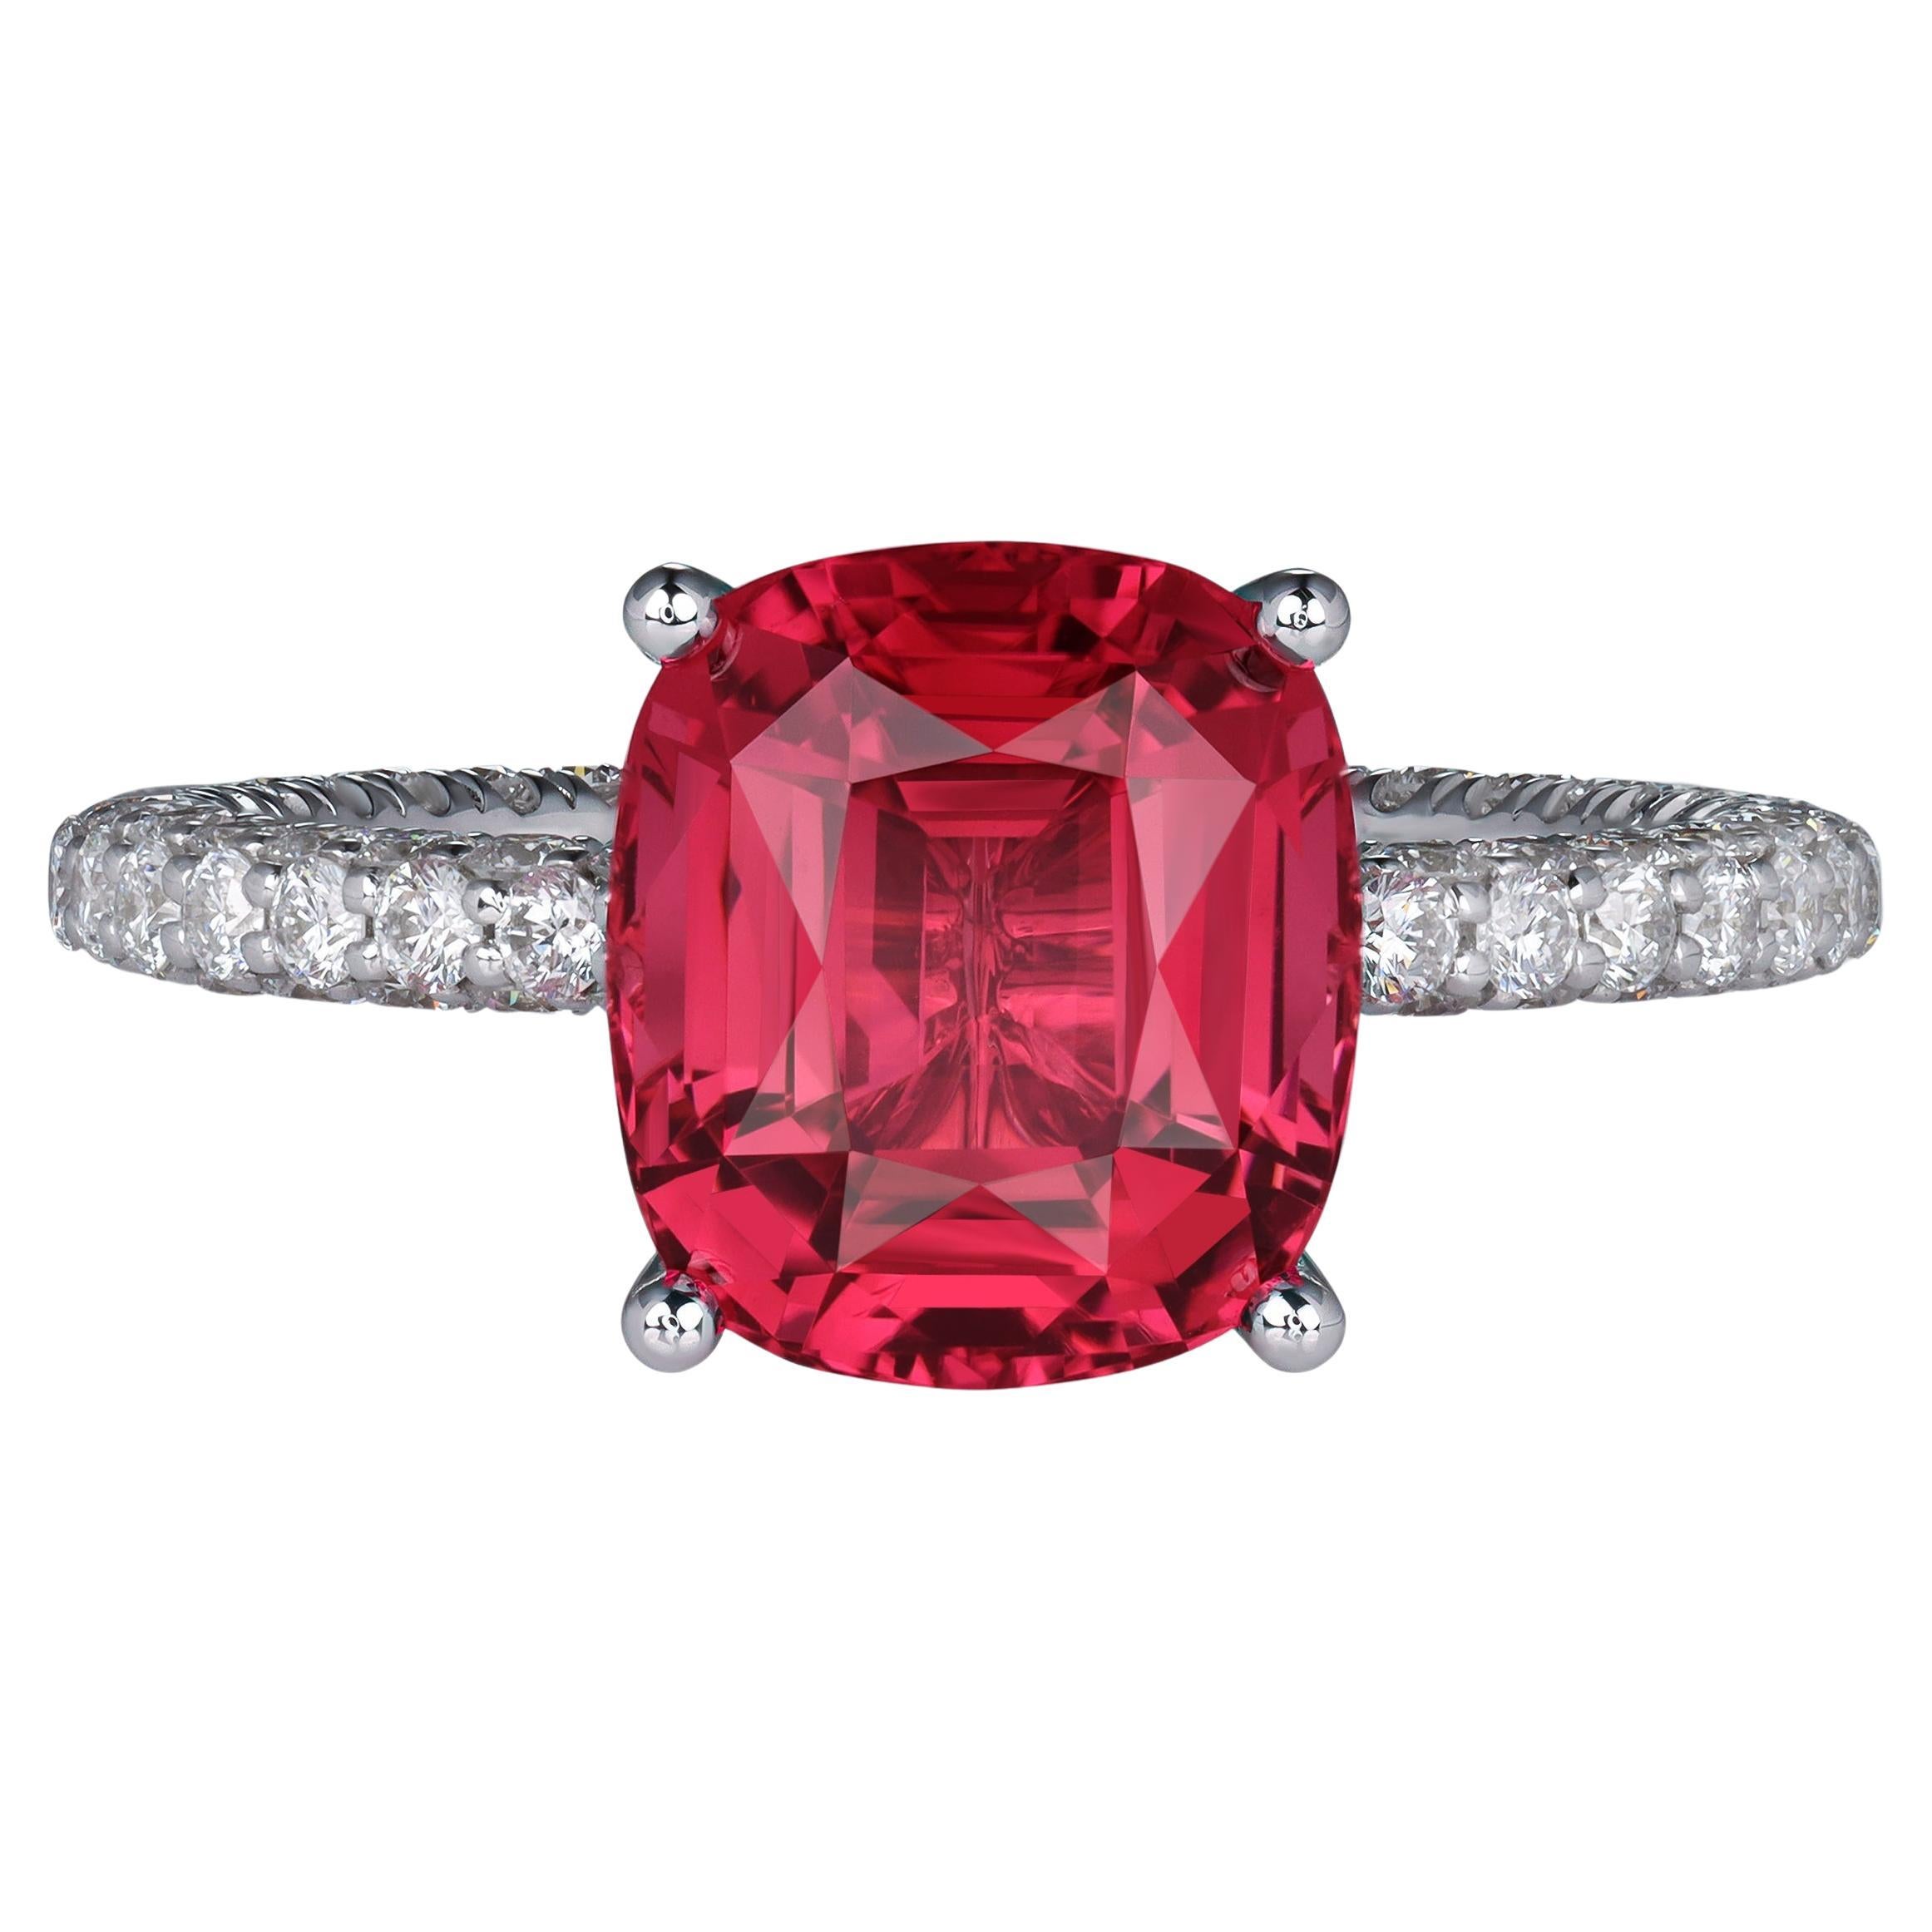 Pinkish-red Rubellite 3.63 carat Ring with diamonds in 18K white gold